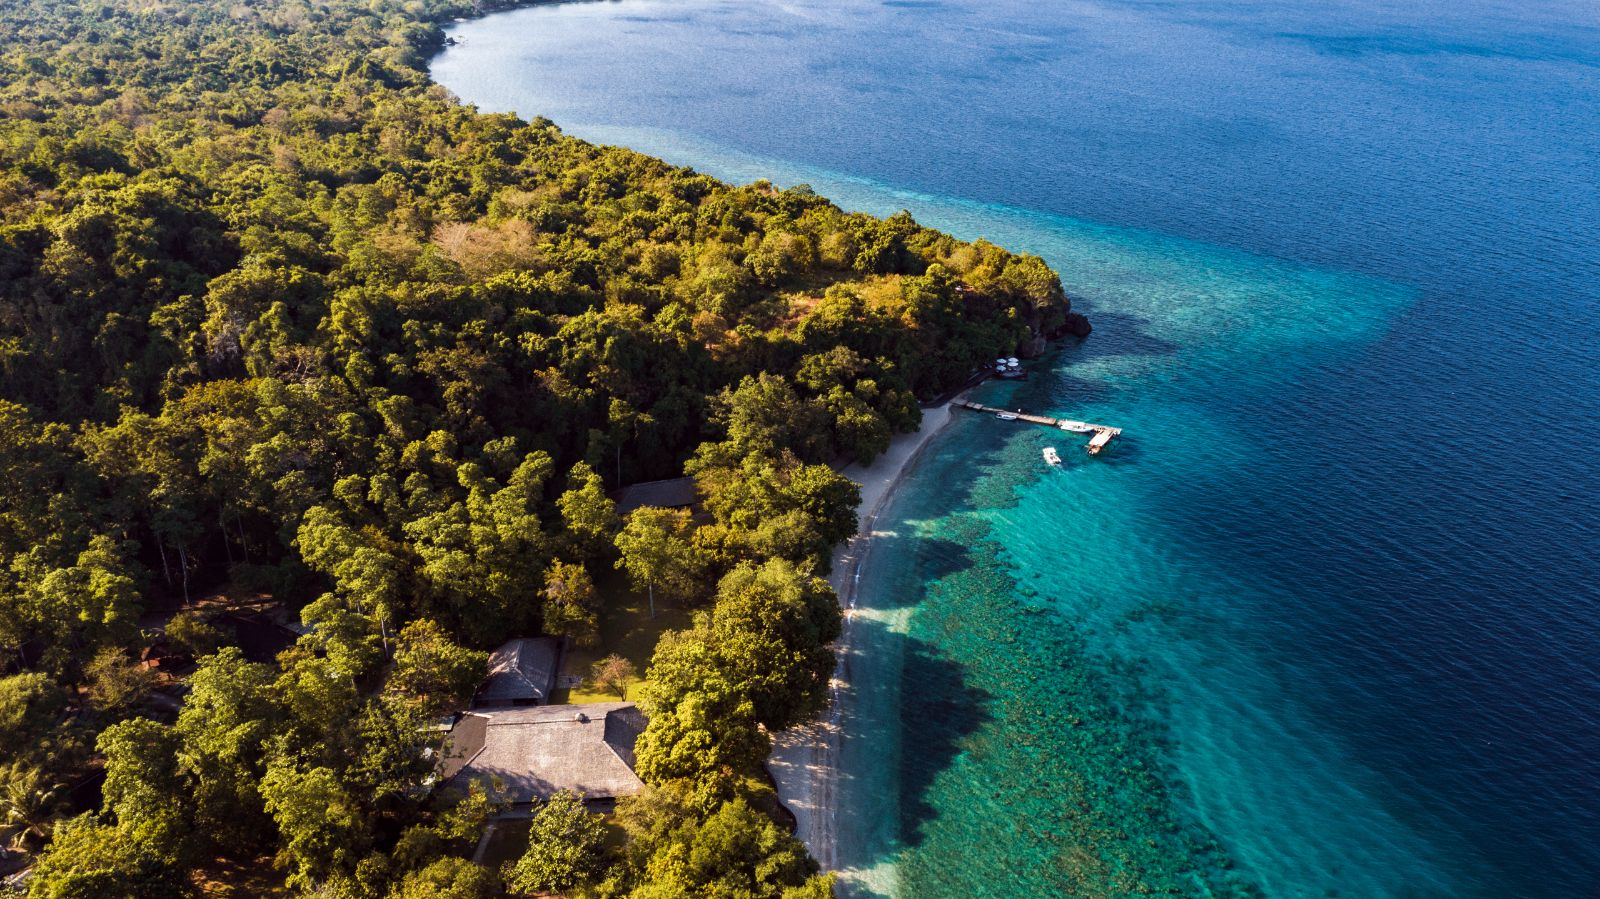 Aerial view of Amanwana resort on Moyo Island